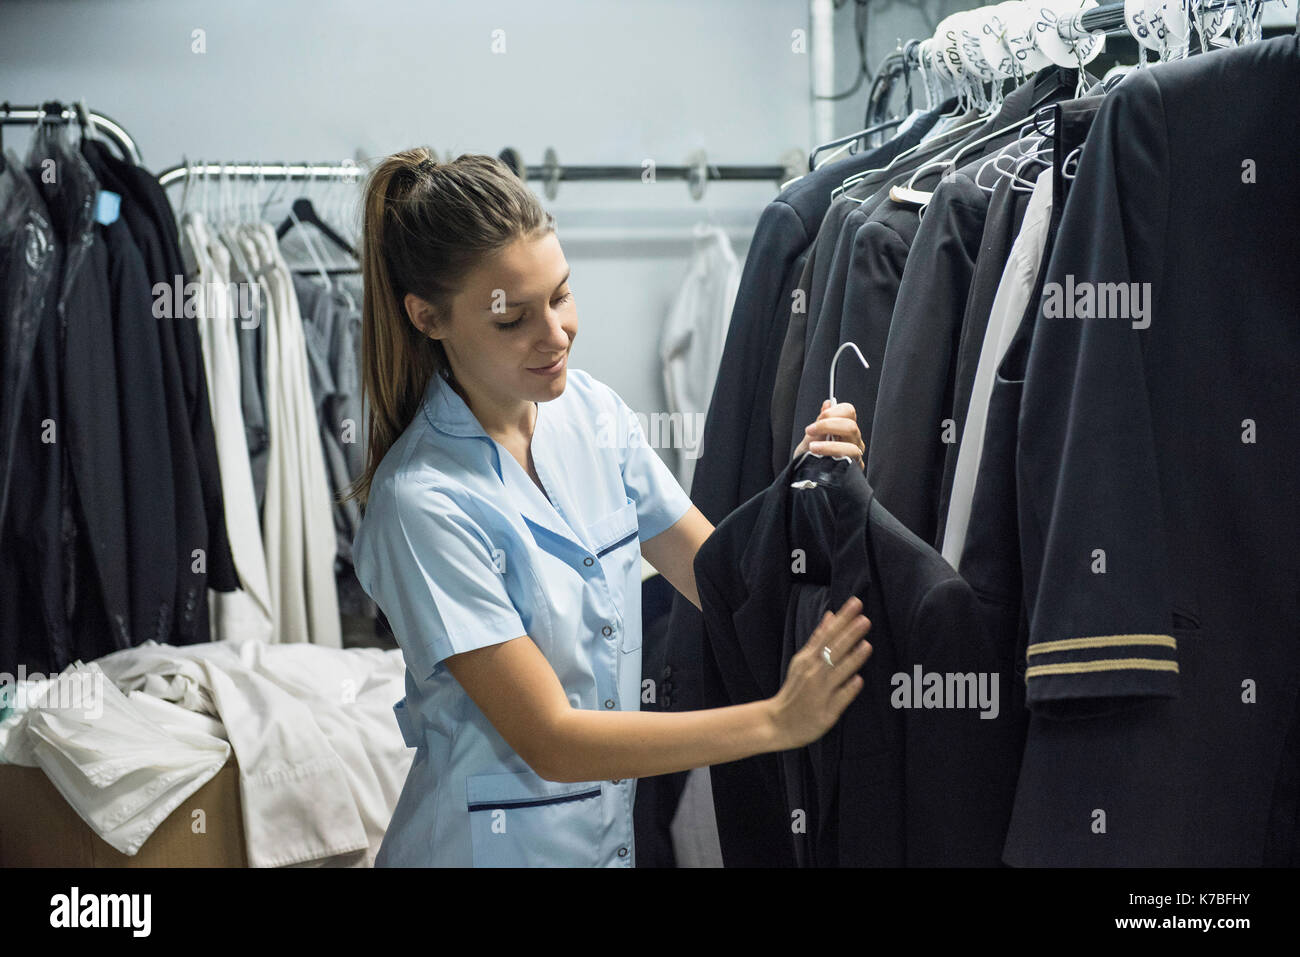 Woman examining blazer Stock Photo